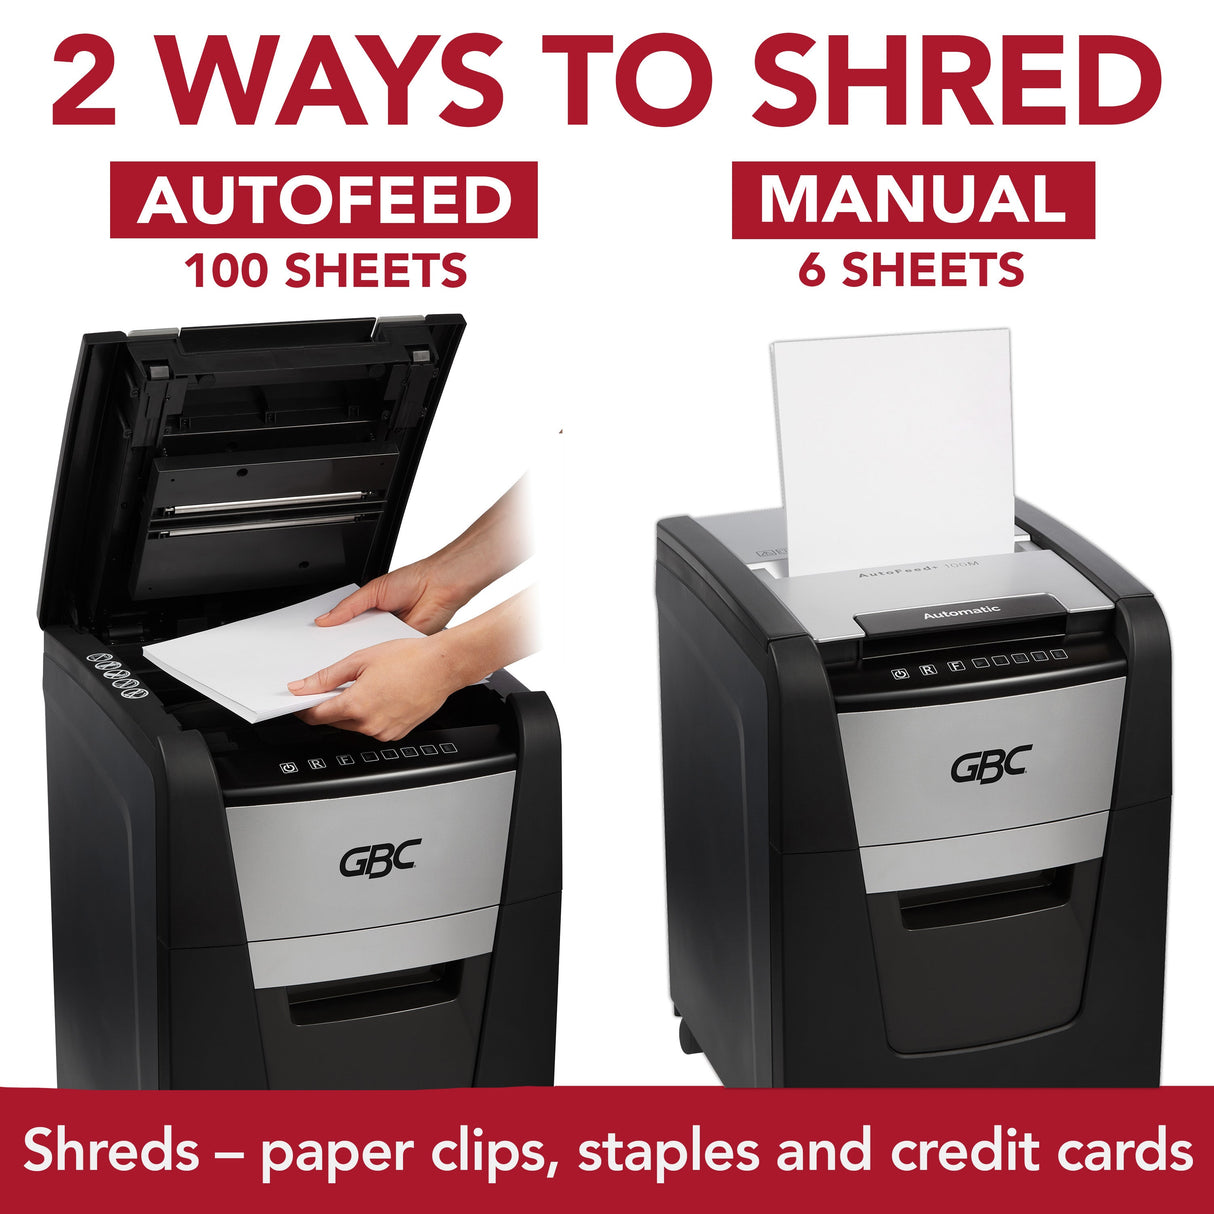 Image of GBC 100M Personal Autofeed+ Shredder